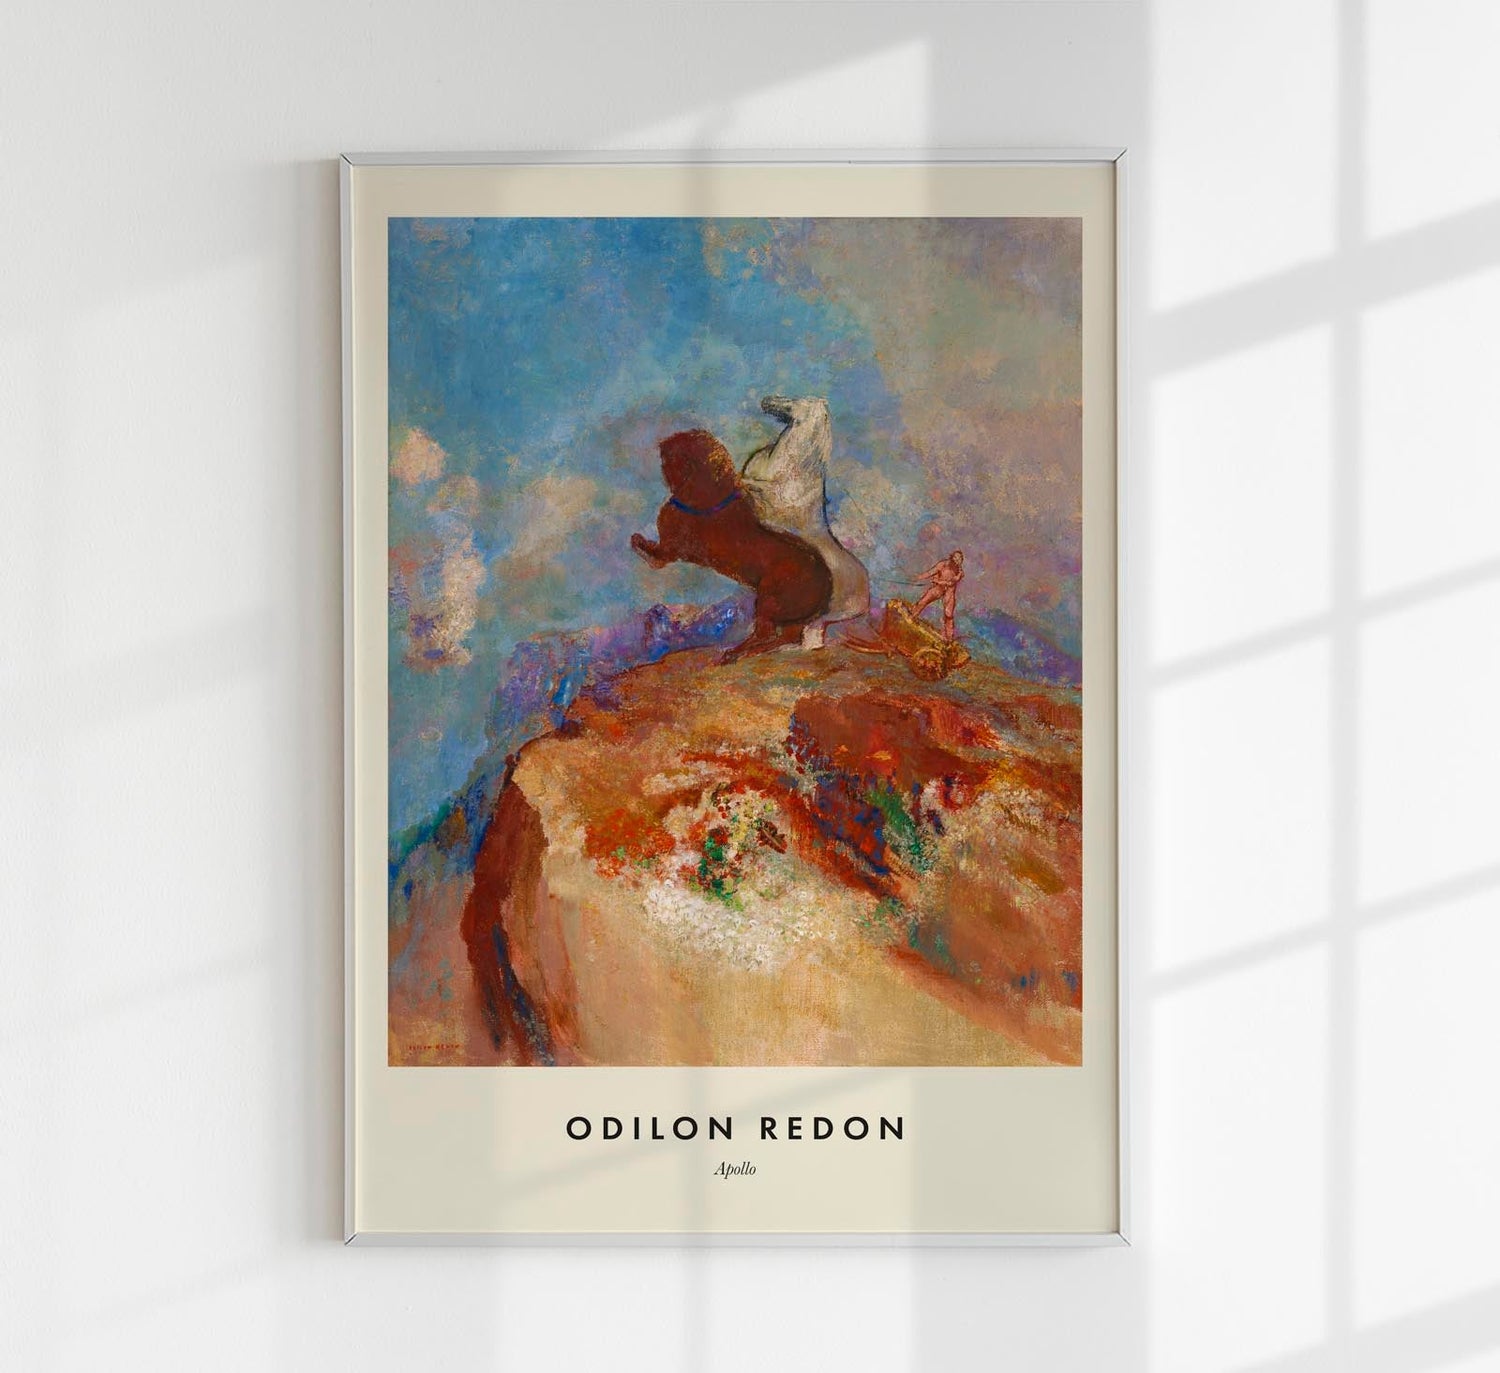 Apollo by Odilon Redon